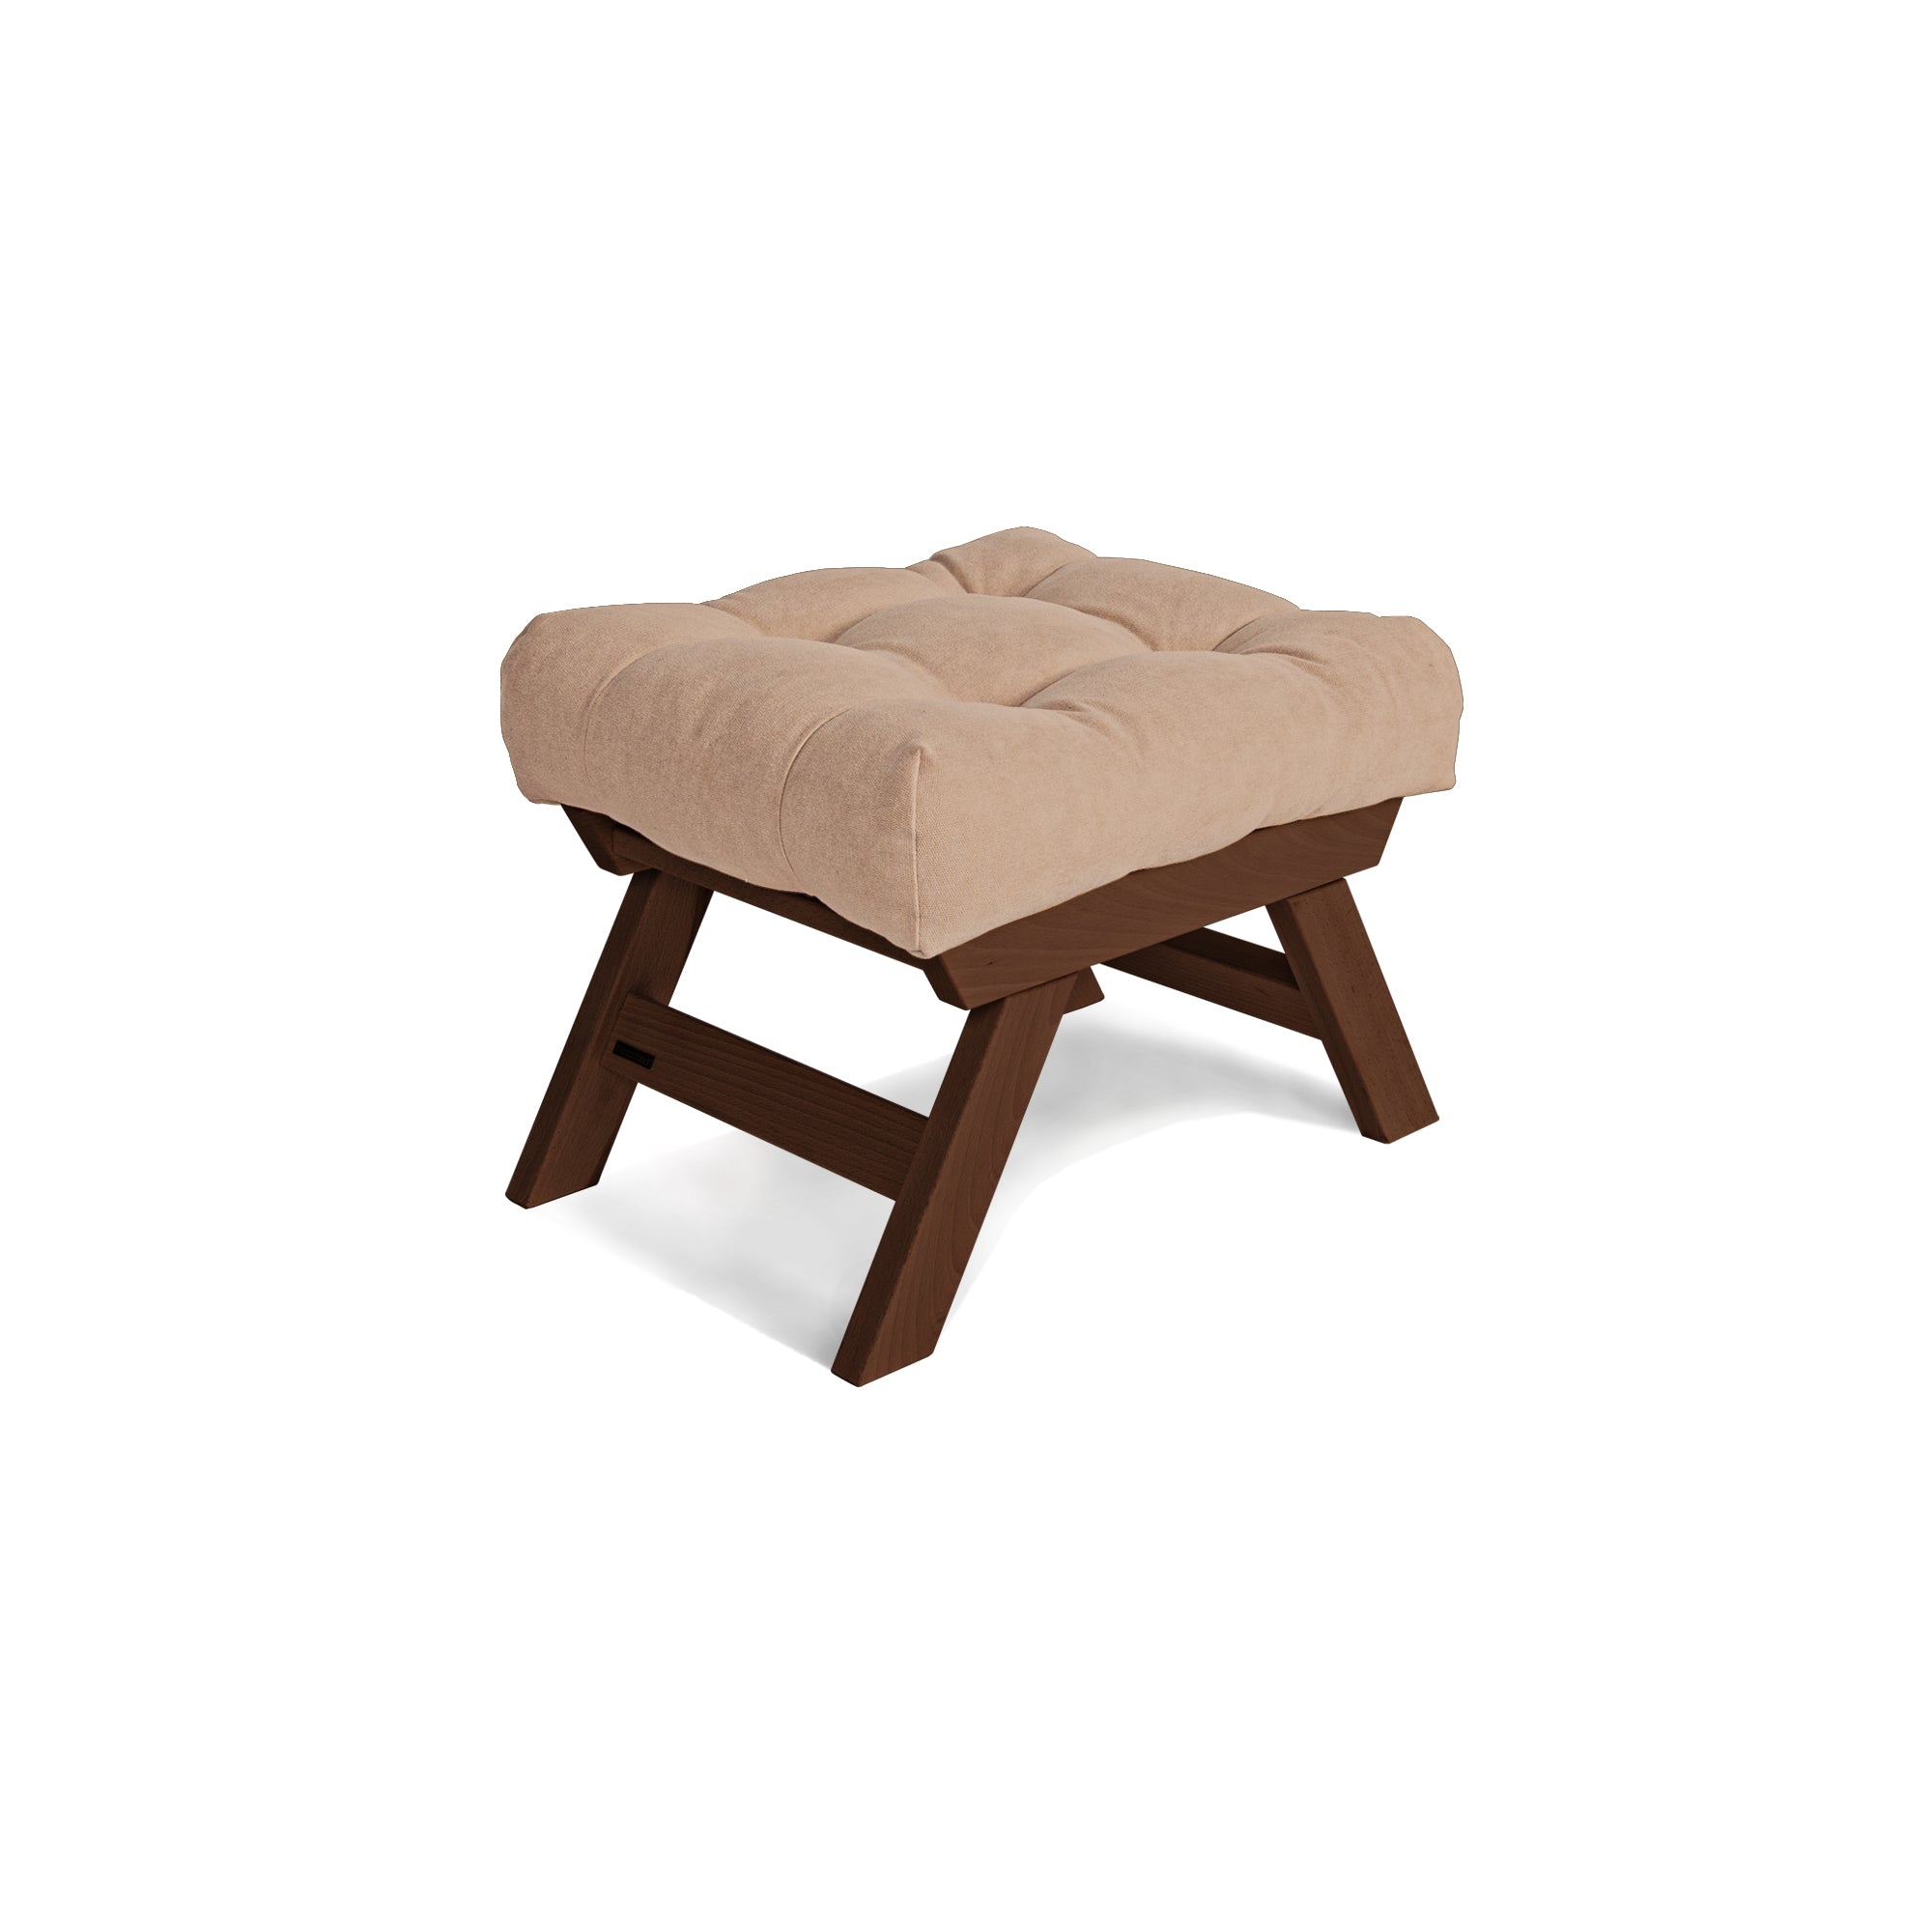 ALLEGRO Pouffe, Walnut Wood upholstery colour beige